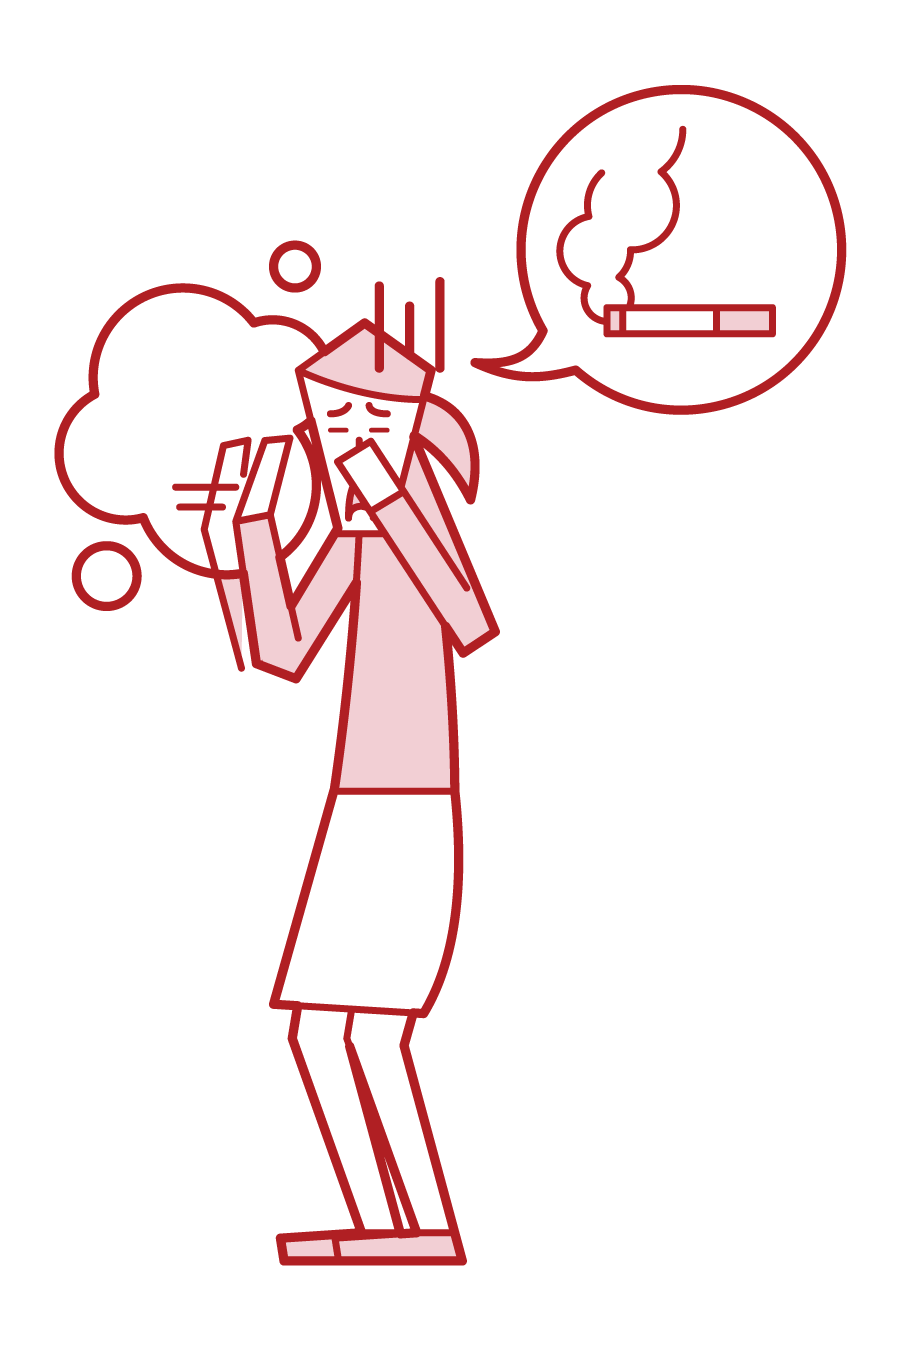 Illustration of a woman who hates cigarette smoke